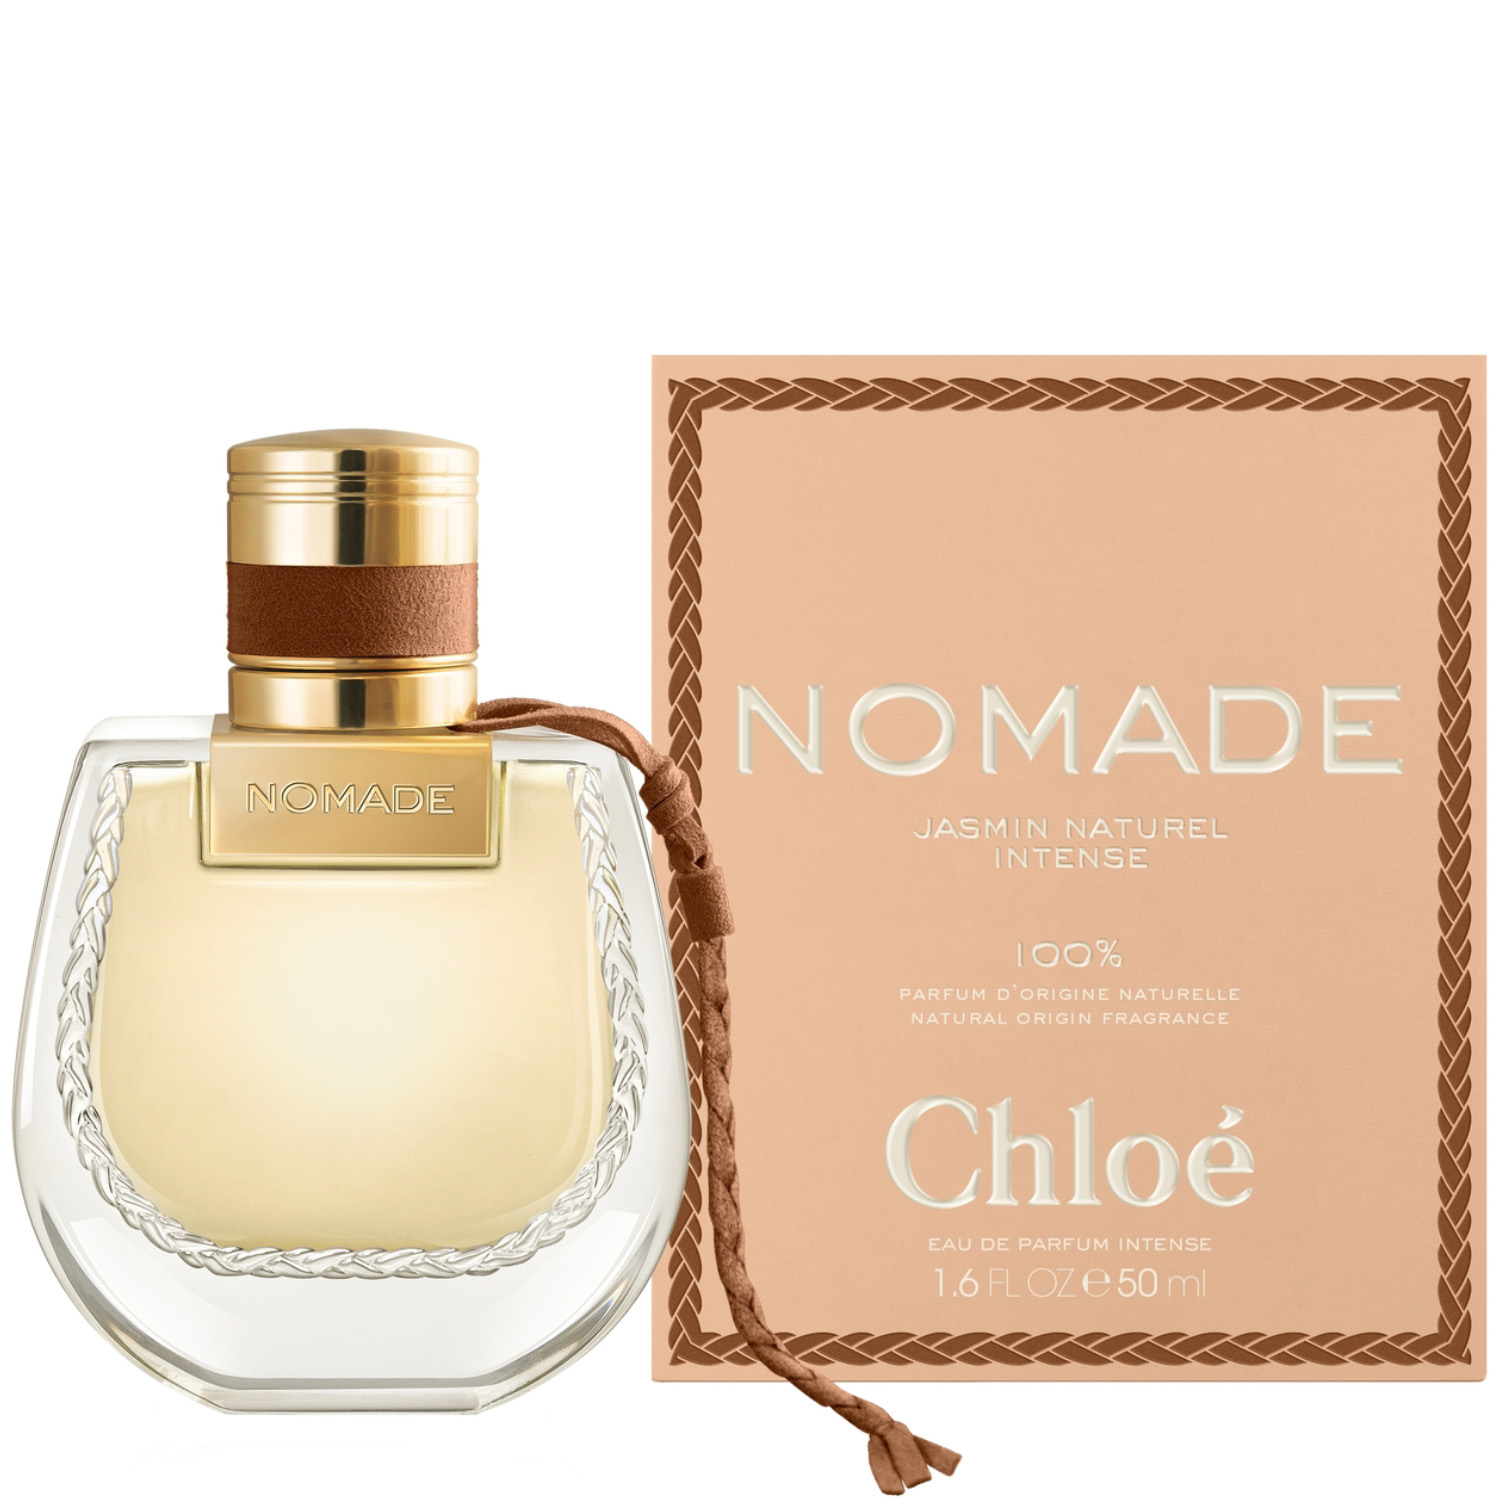 Chloé Nomade Jasmin Naturel Eau de Parfum Intense 50ml